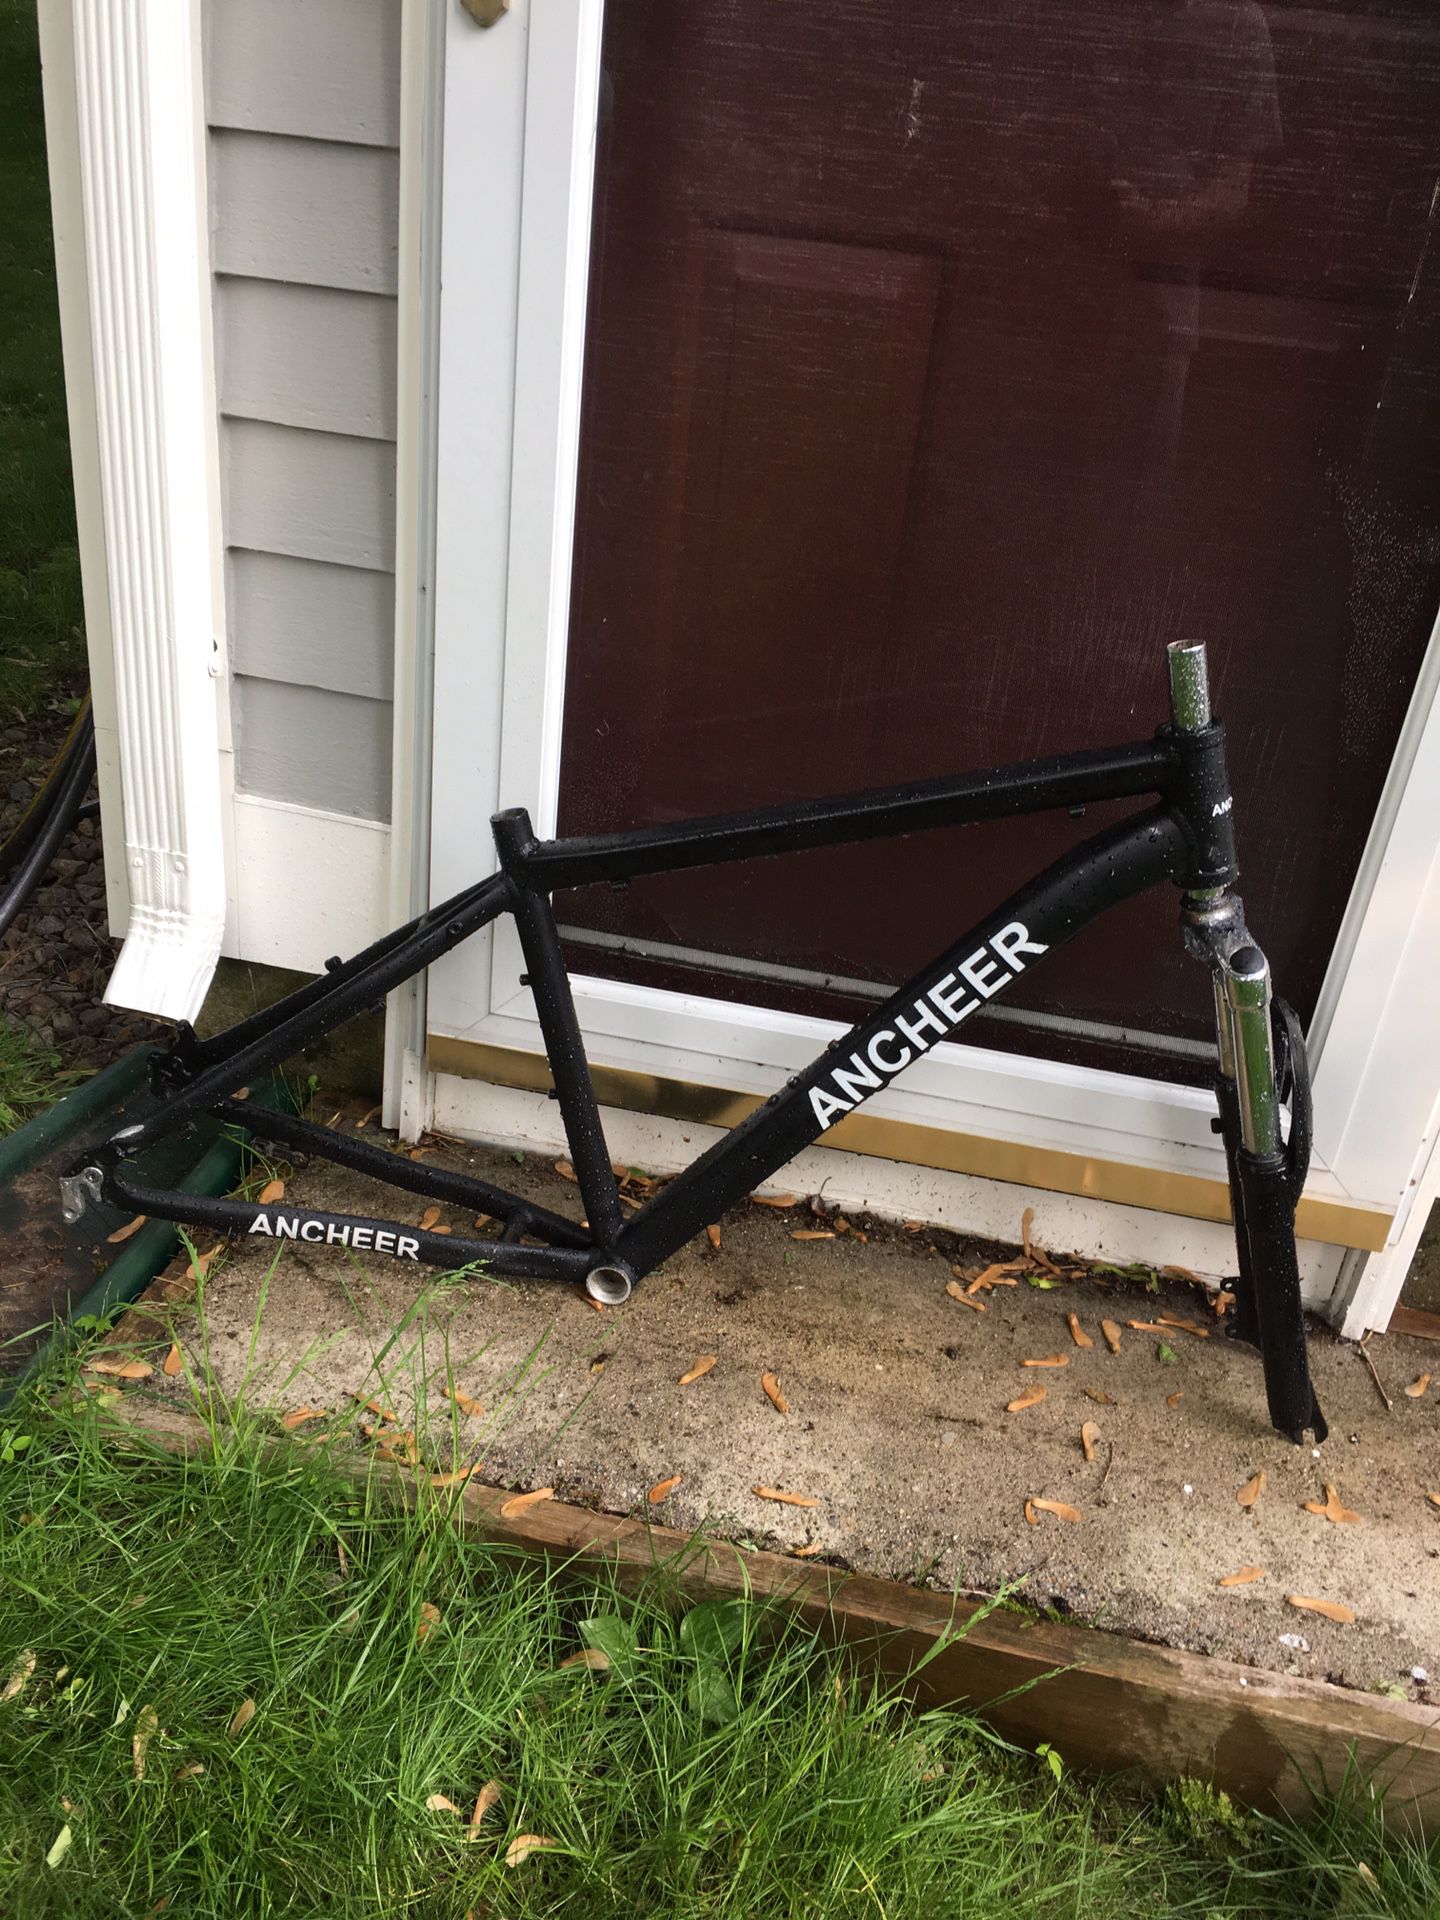 Ancheer mountain bike frame( very light)